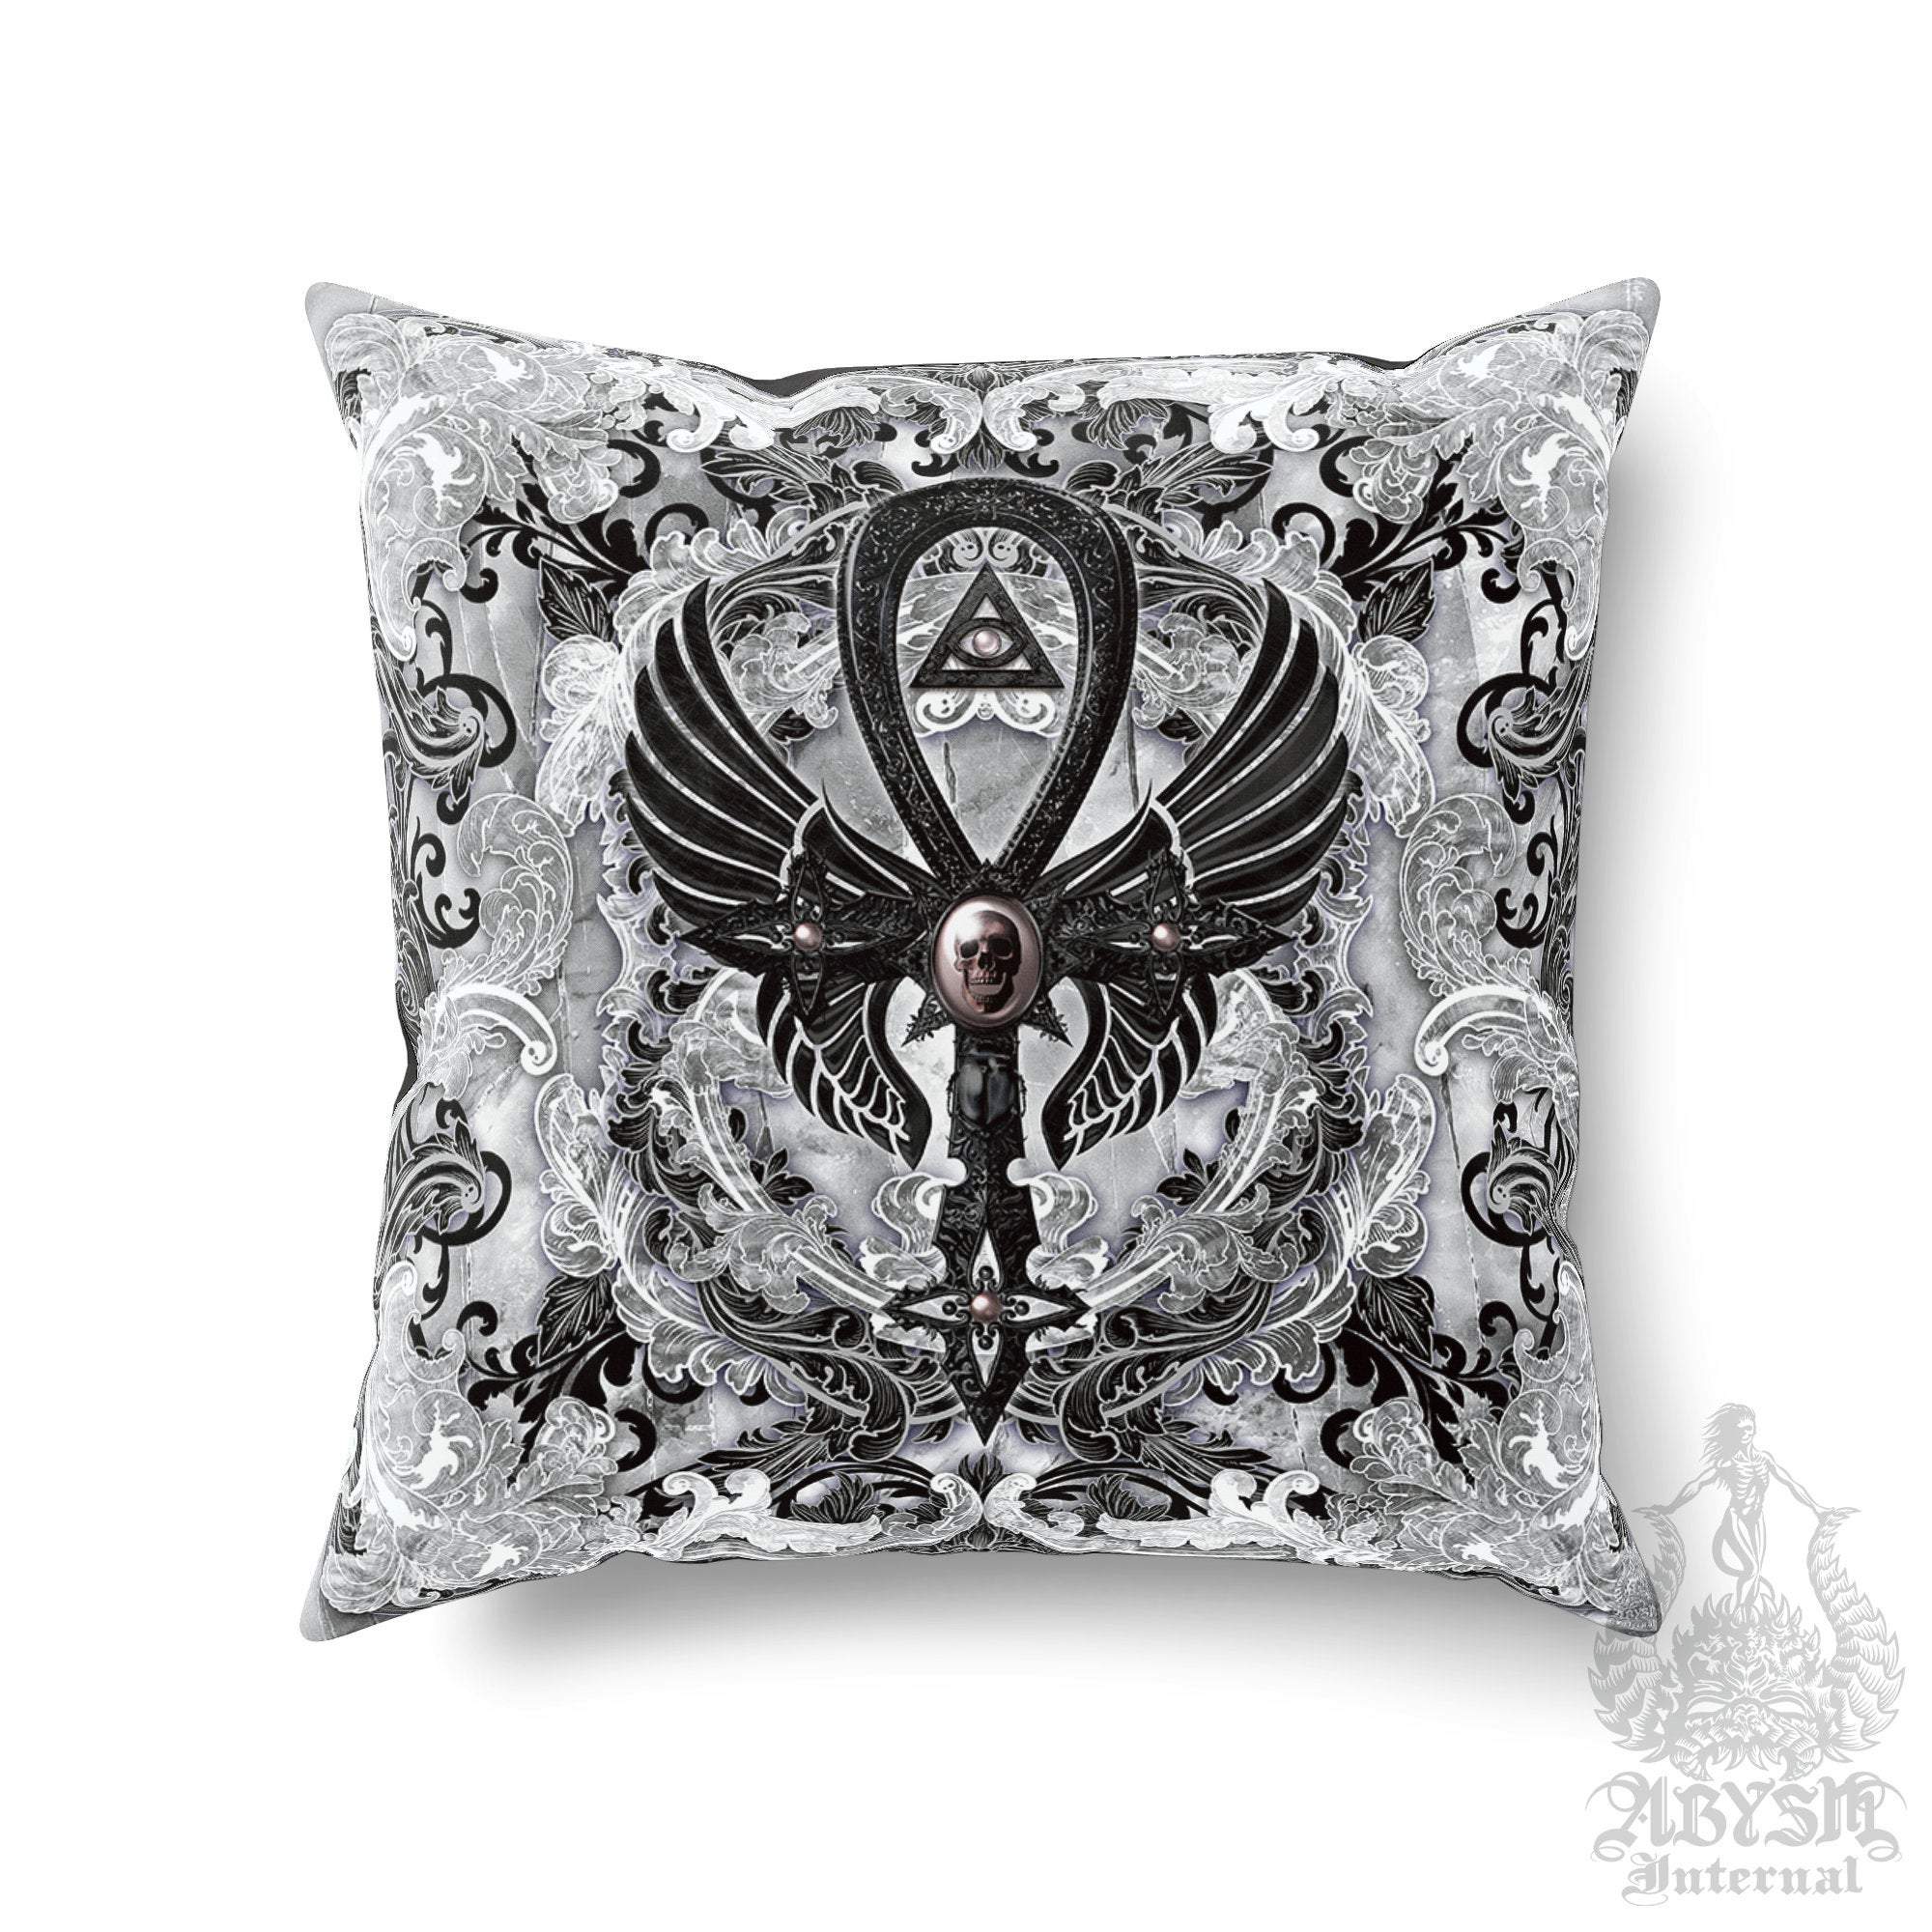 White Goth Throw Pillow, Decorative Accent Cushion, Gothic Room Decor, Dark Art, Alternative Home - Ankh Cross, Black & White - Abysm Internal